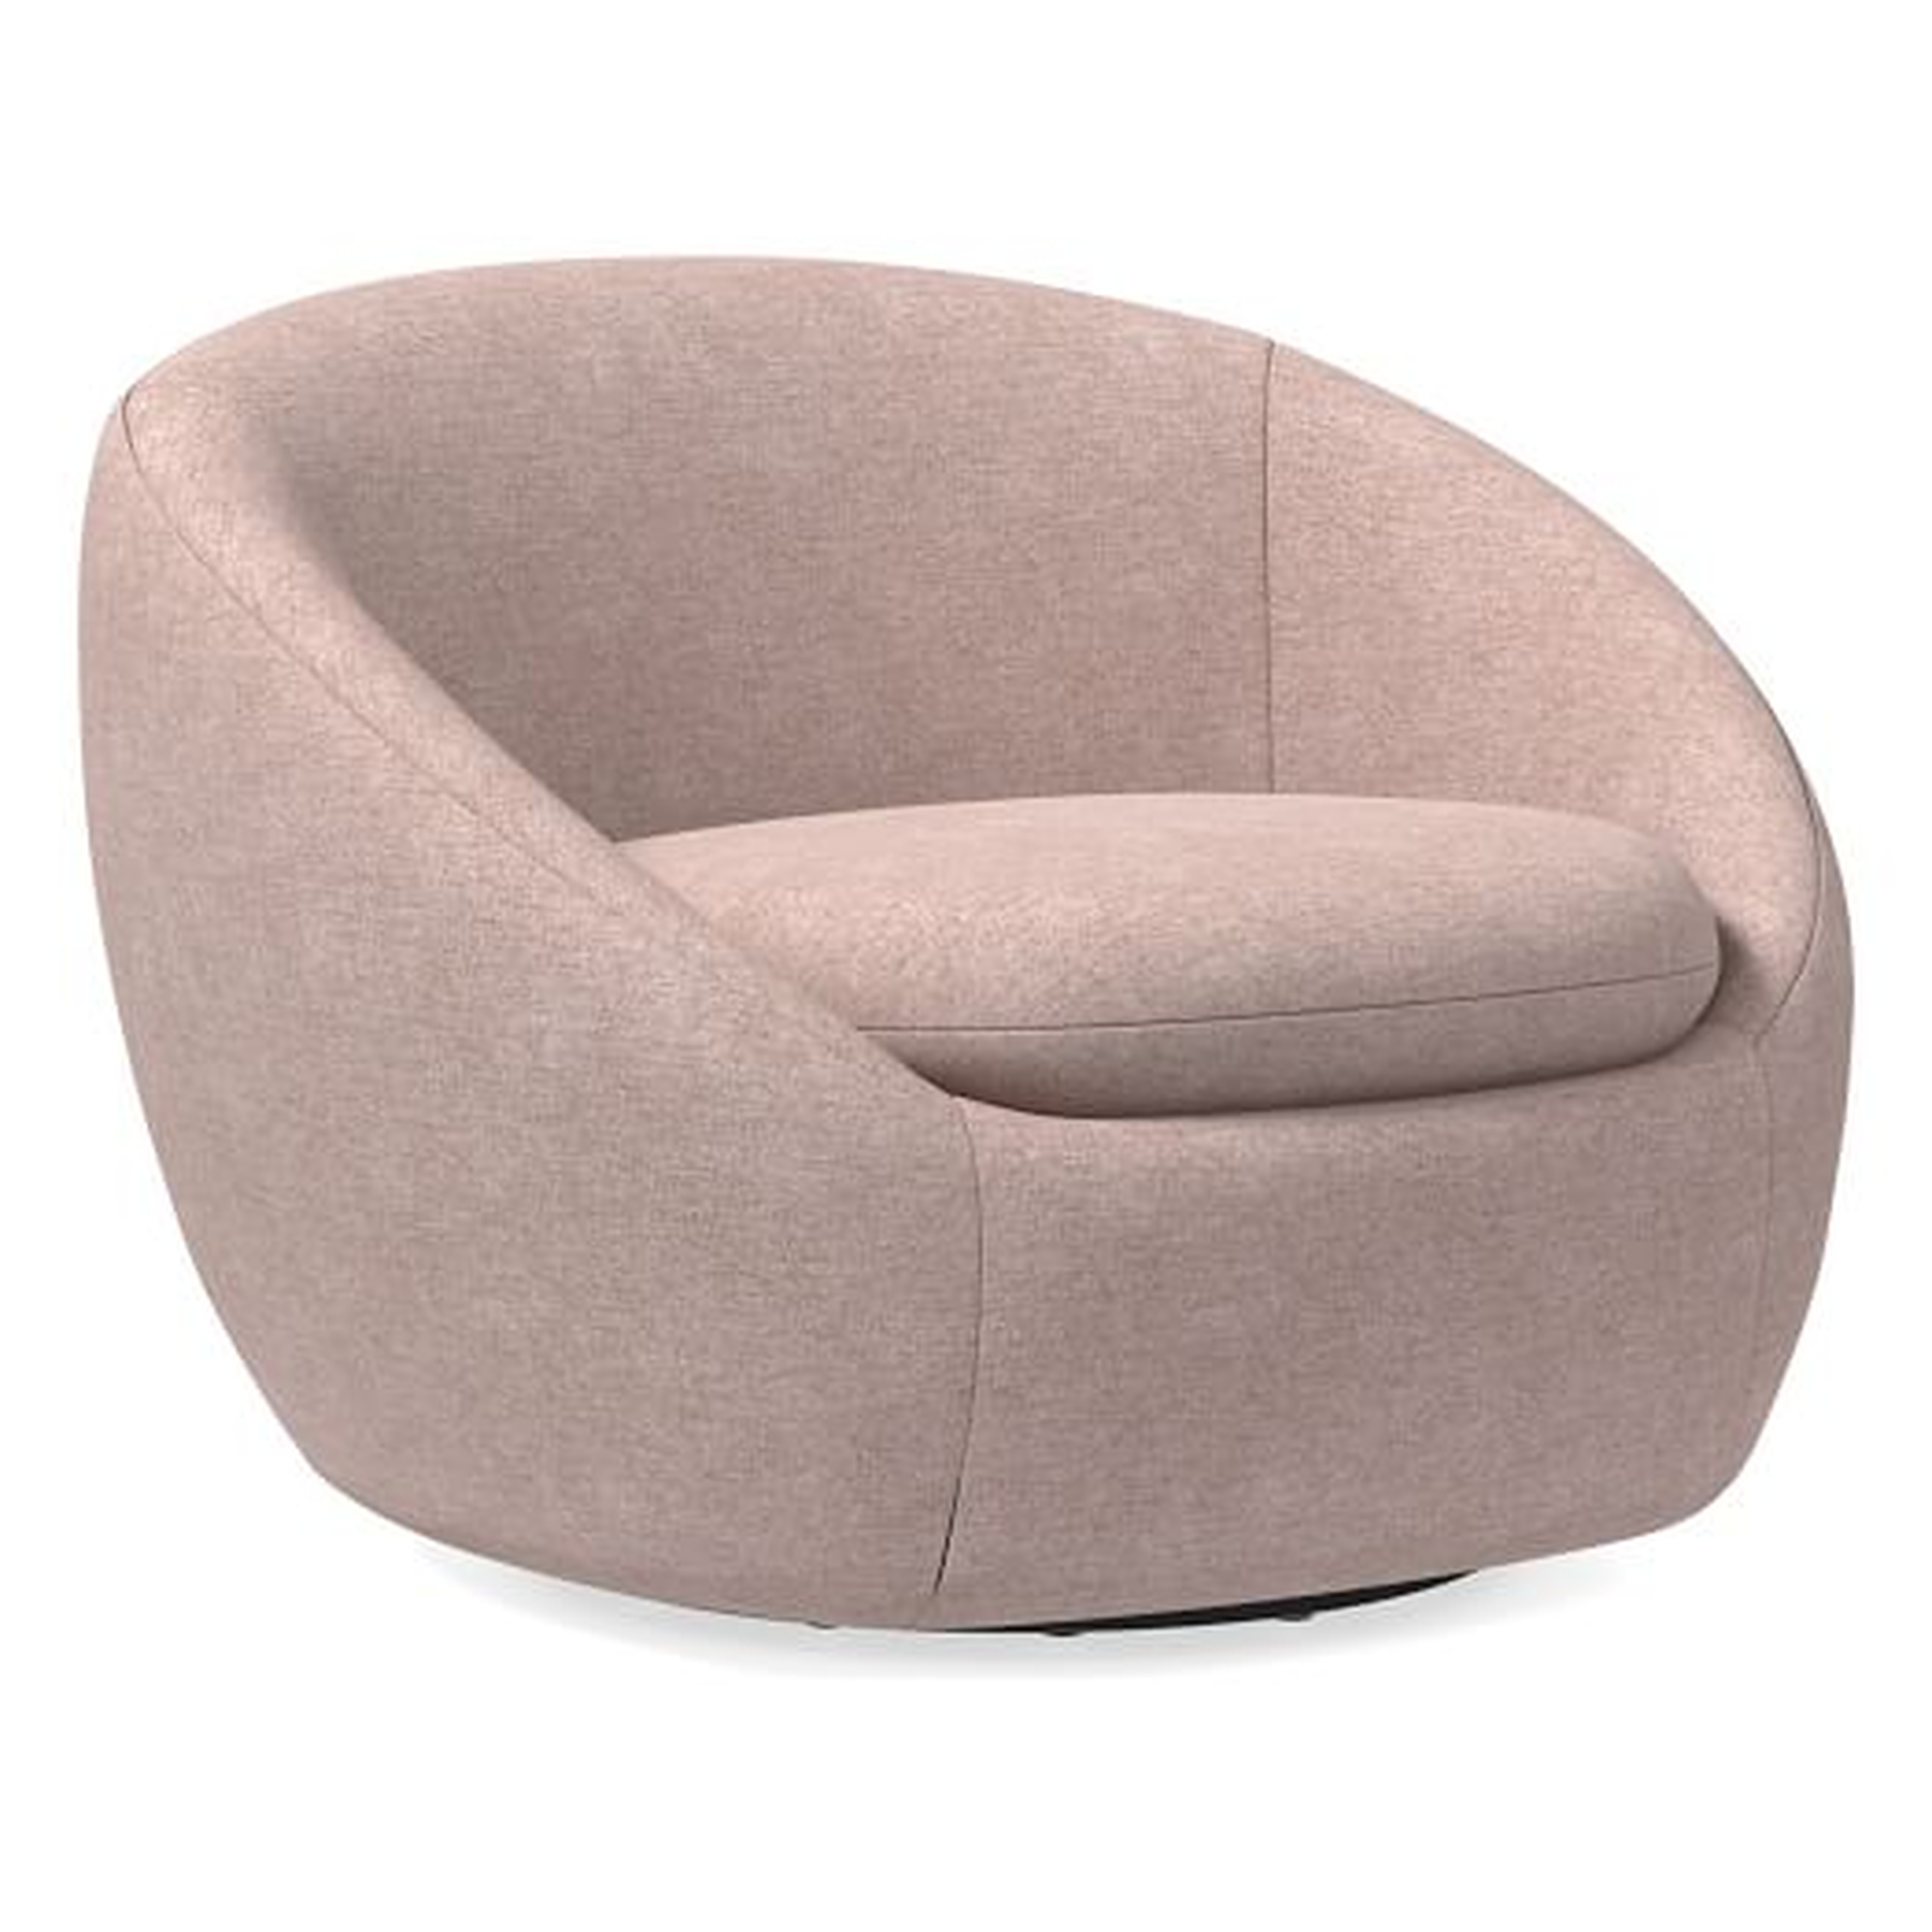 Cozy Swivel Chair, Distressed Velvet, Light Pink - West Elm